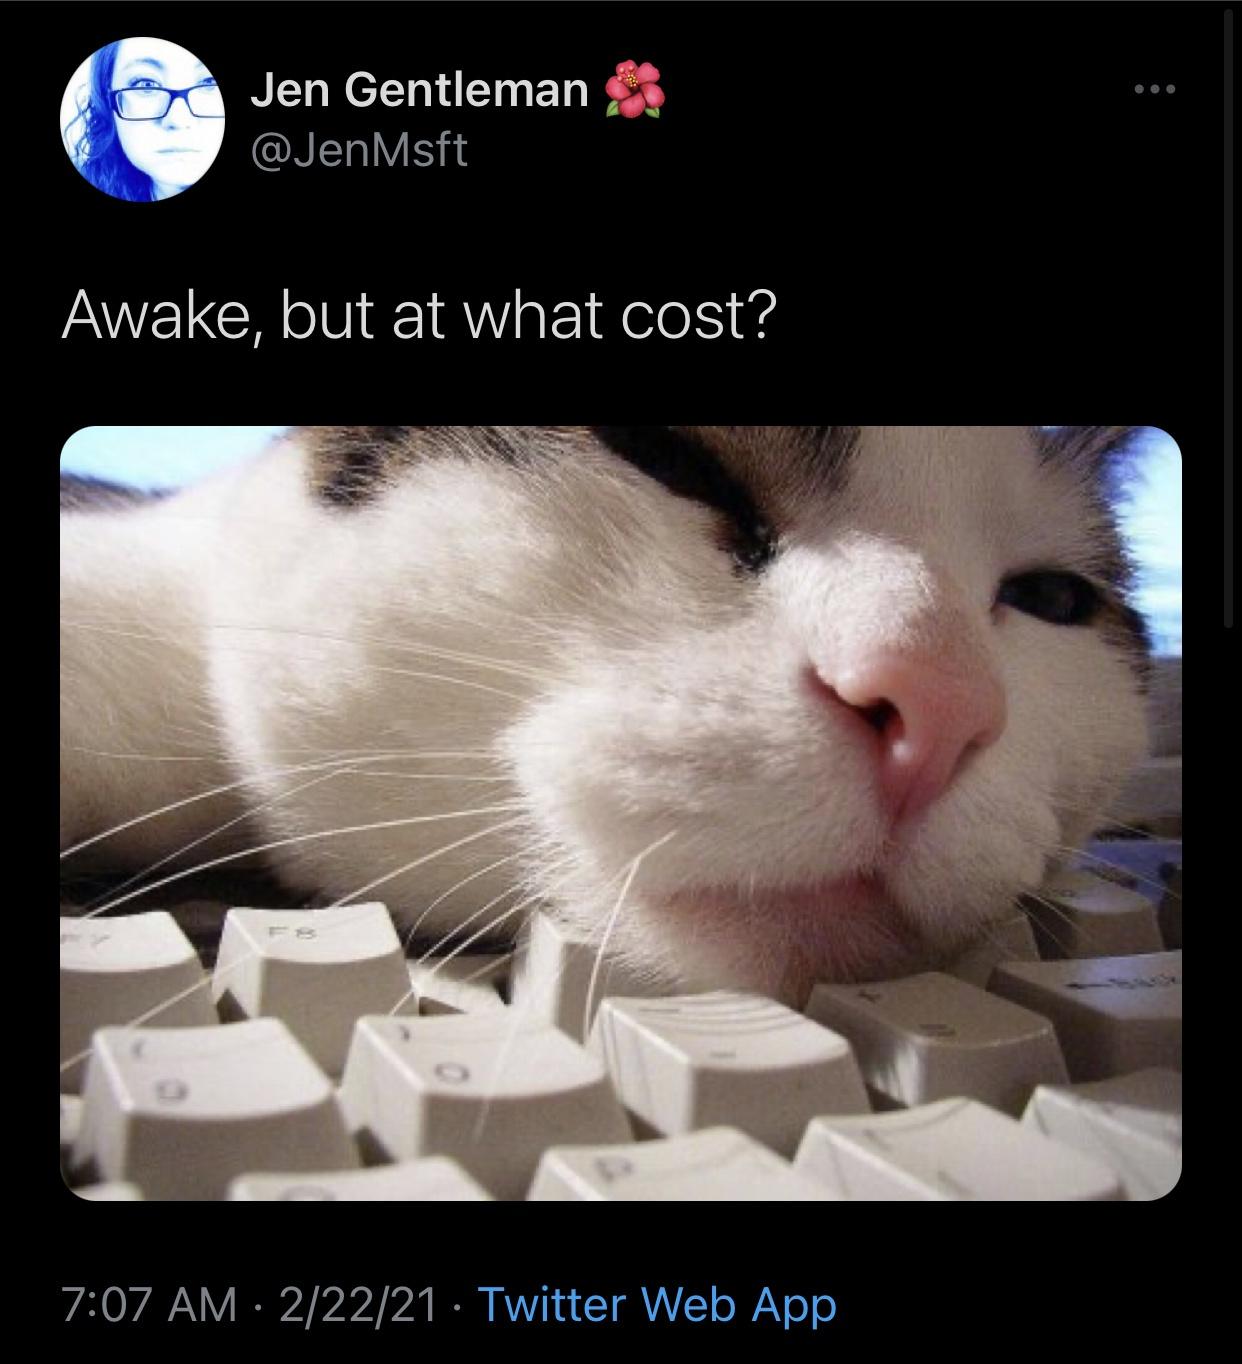 cat on keyboard - Jen Gentleman Awake, but at what cost? 22221 Twitter Web App